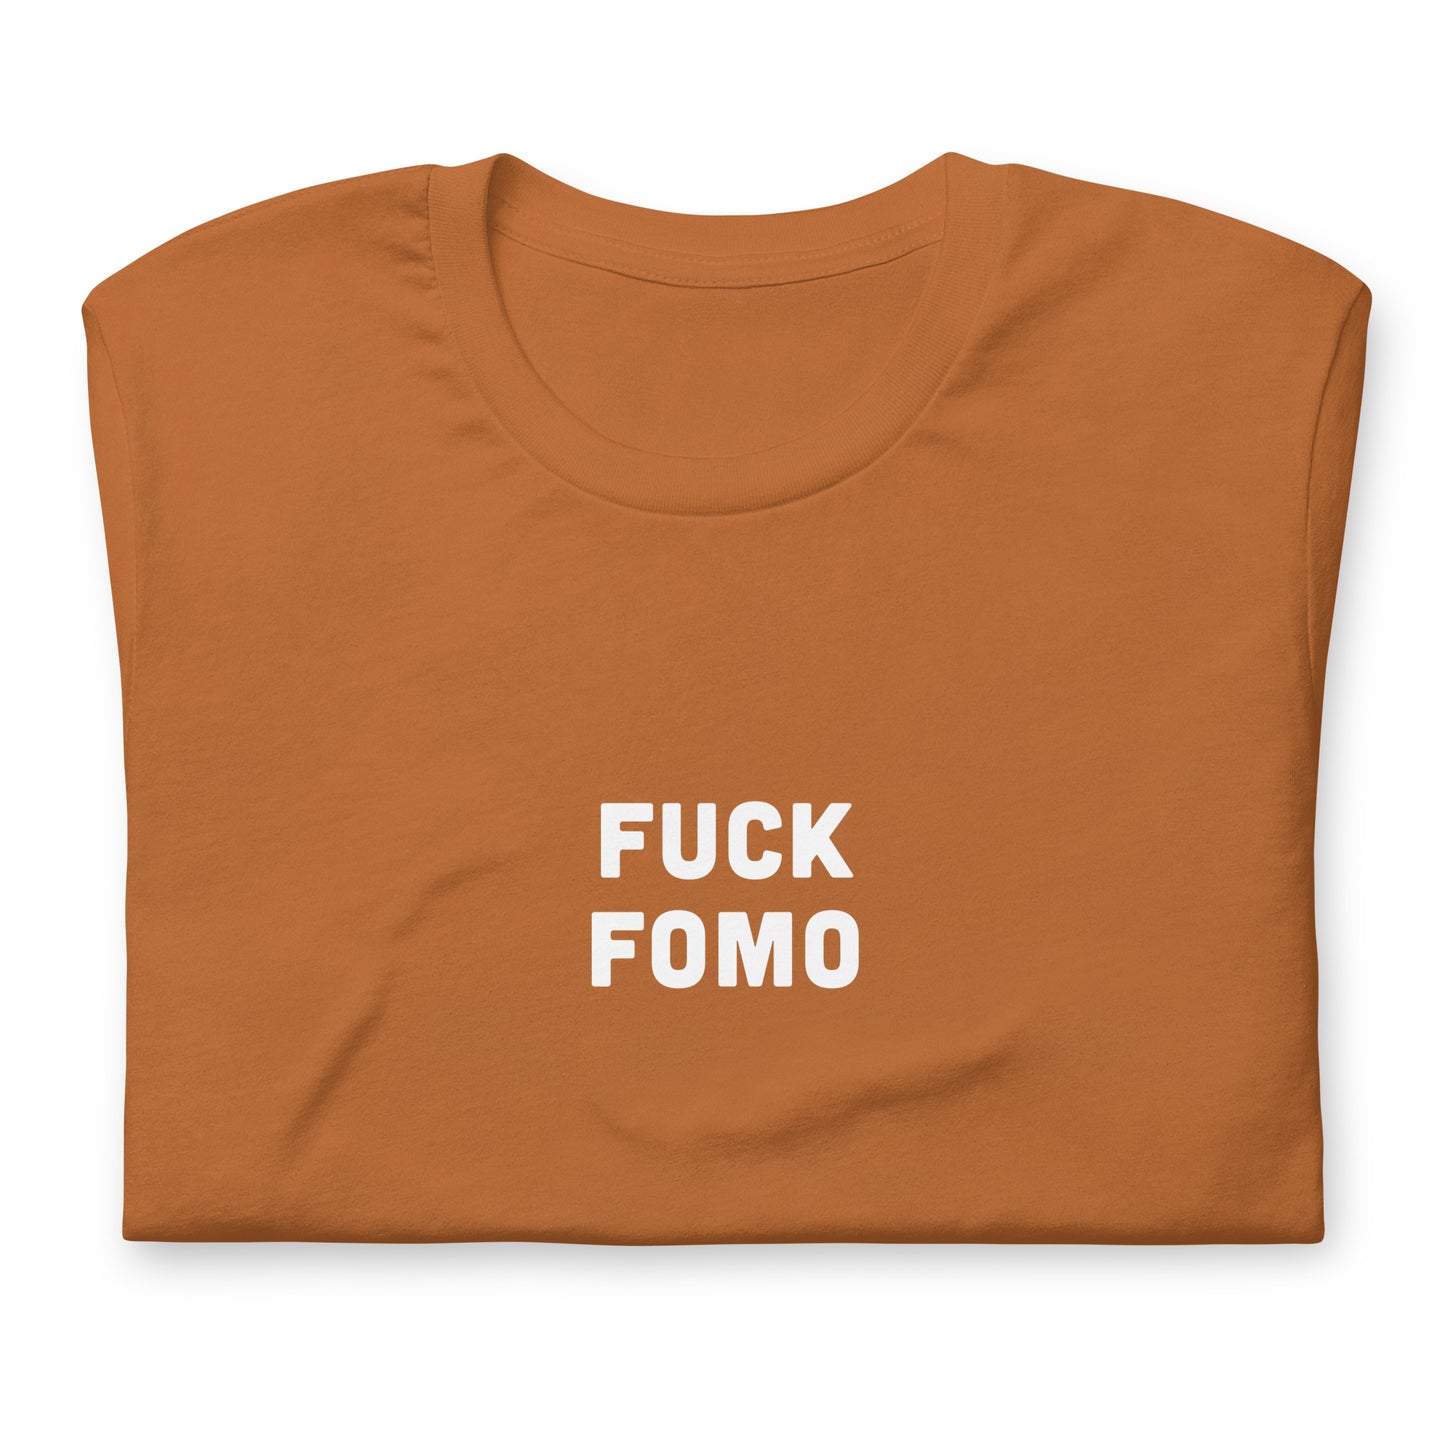 Fuck Fomo T-Shirt Size 2XL Color Navy